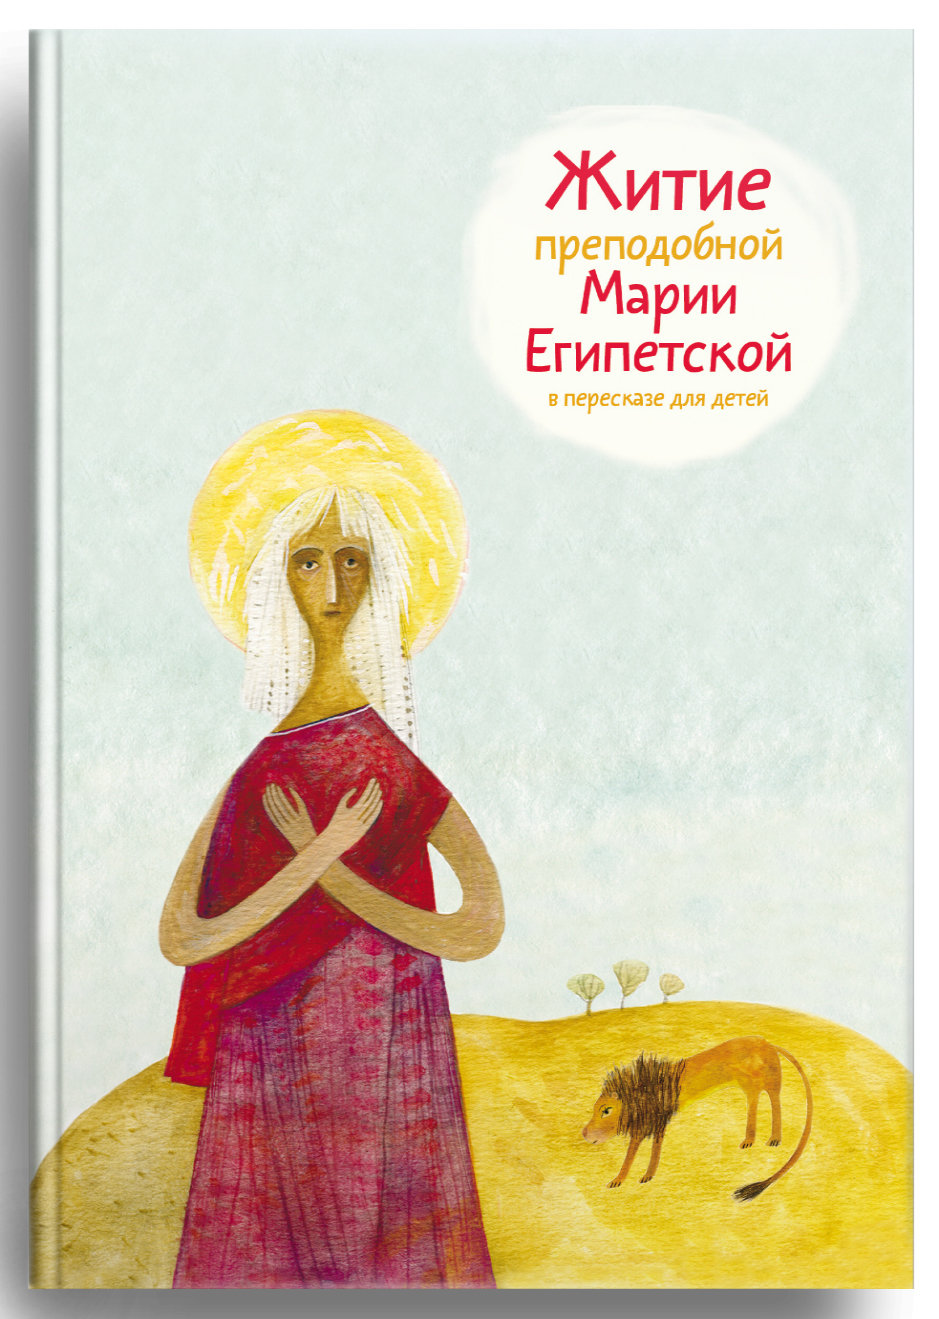 Life of Saint Mary of Egypt for Kids  (in Russian). Житие преподобной Марии Египетской в пересказе для детей